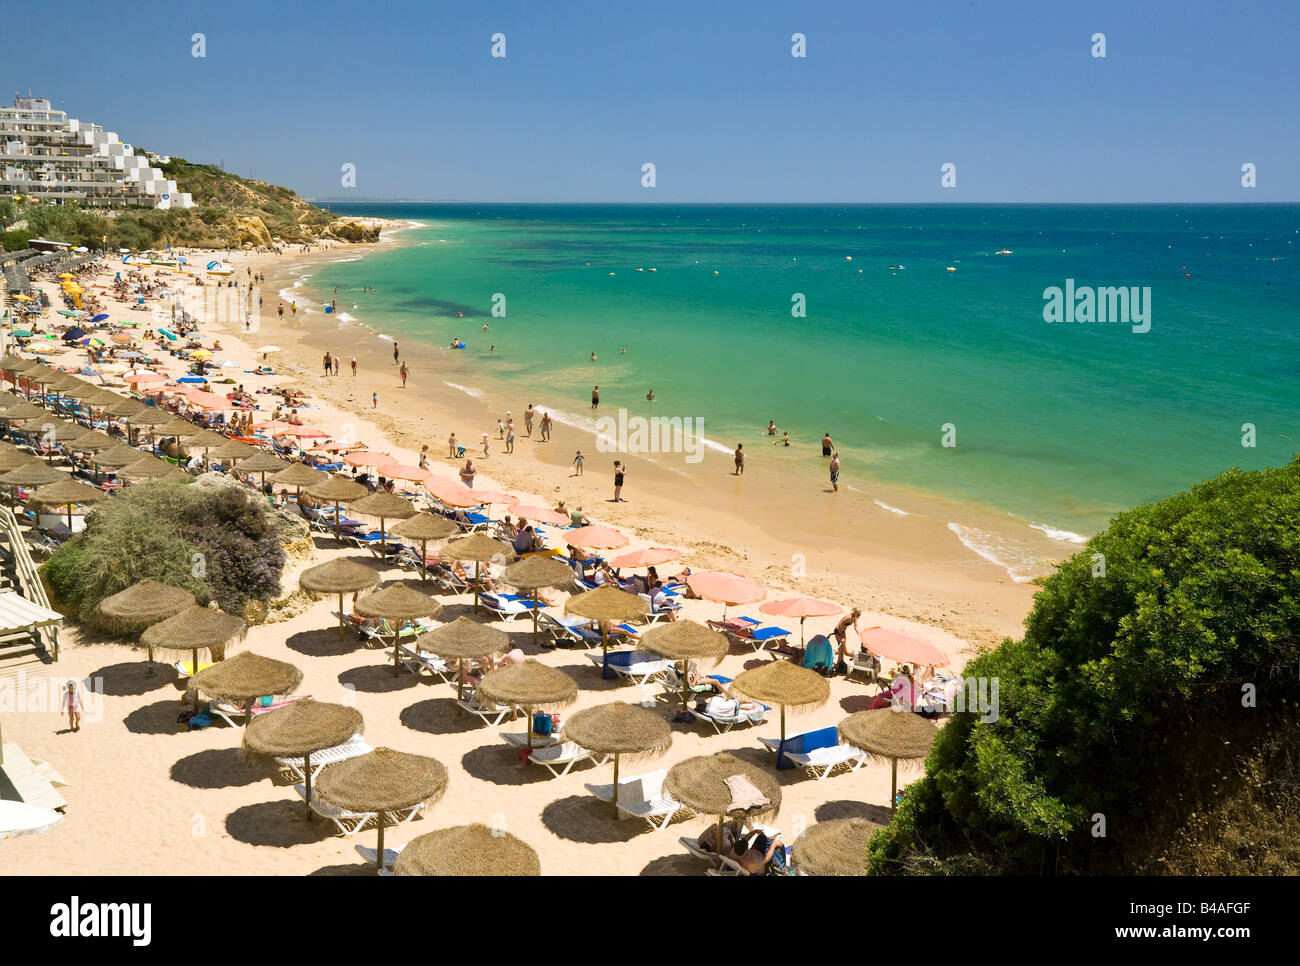 Praia da oura beach hi-res stock photography and images - Alamy